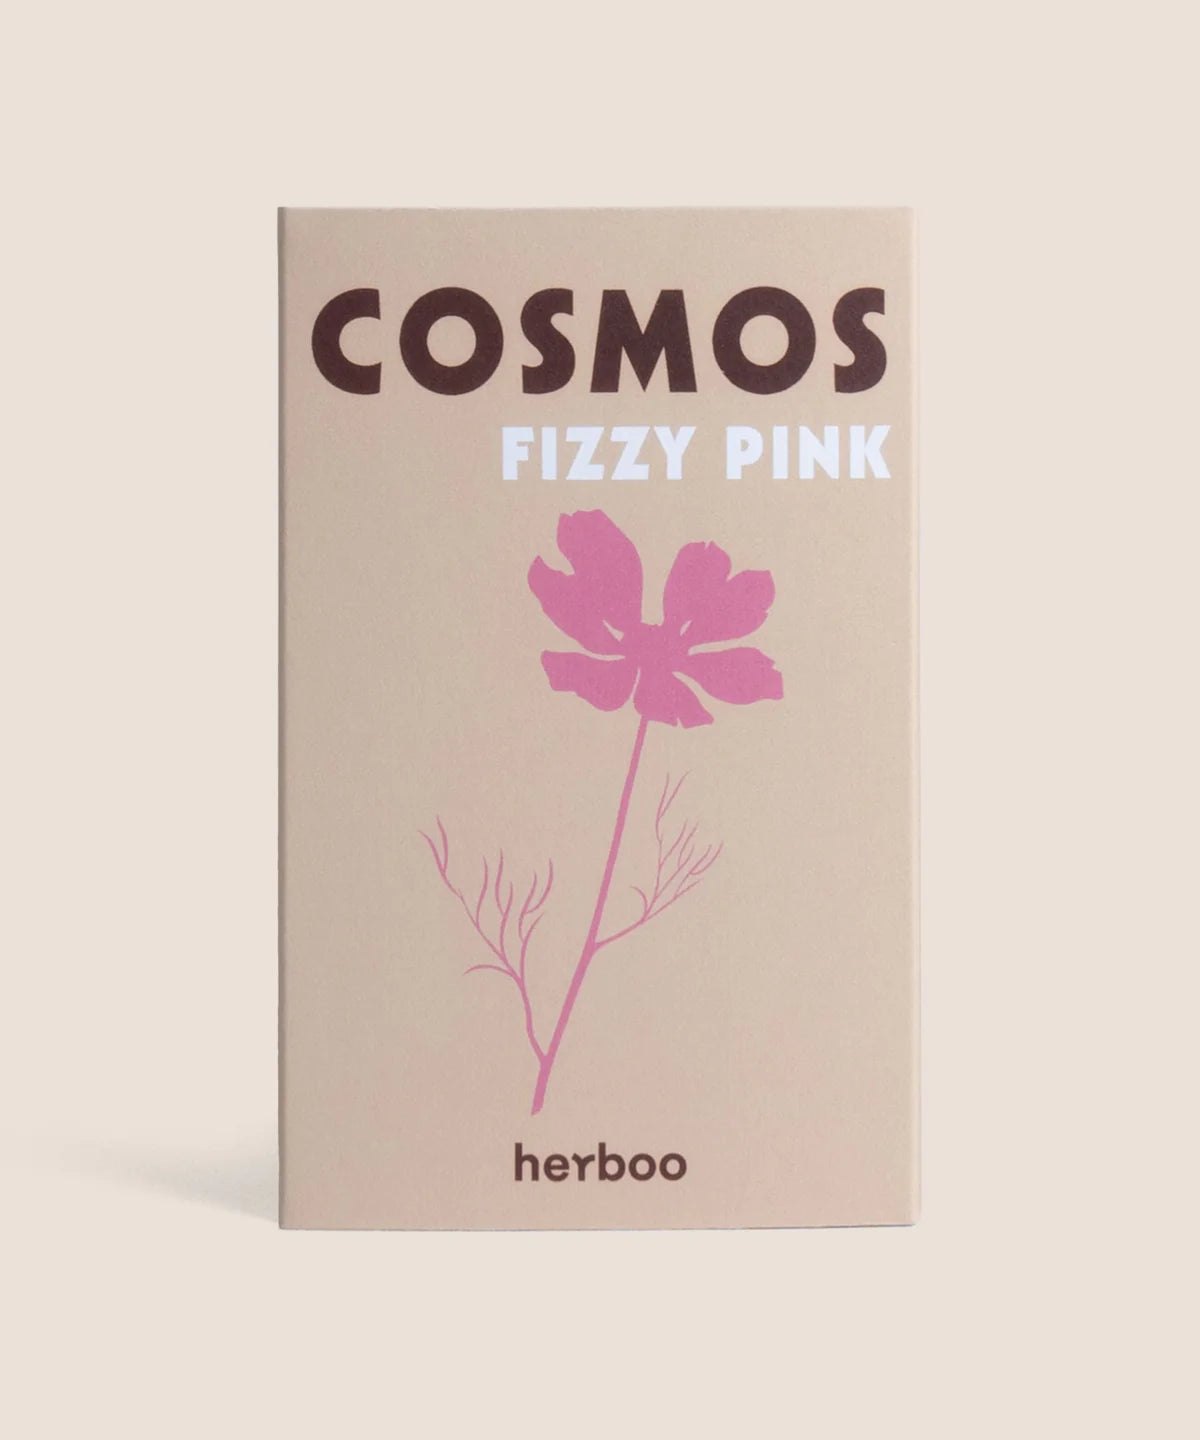 COSMOS "FIZZY PINK" SEEDS | HERBOO